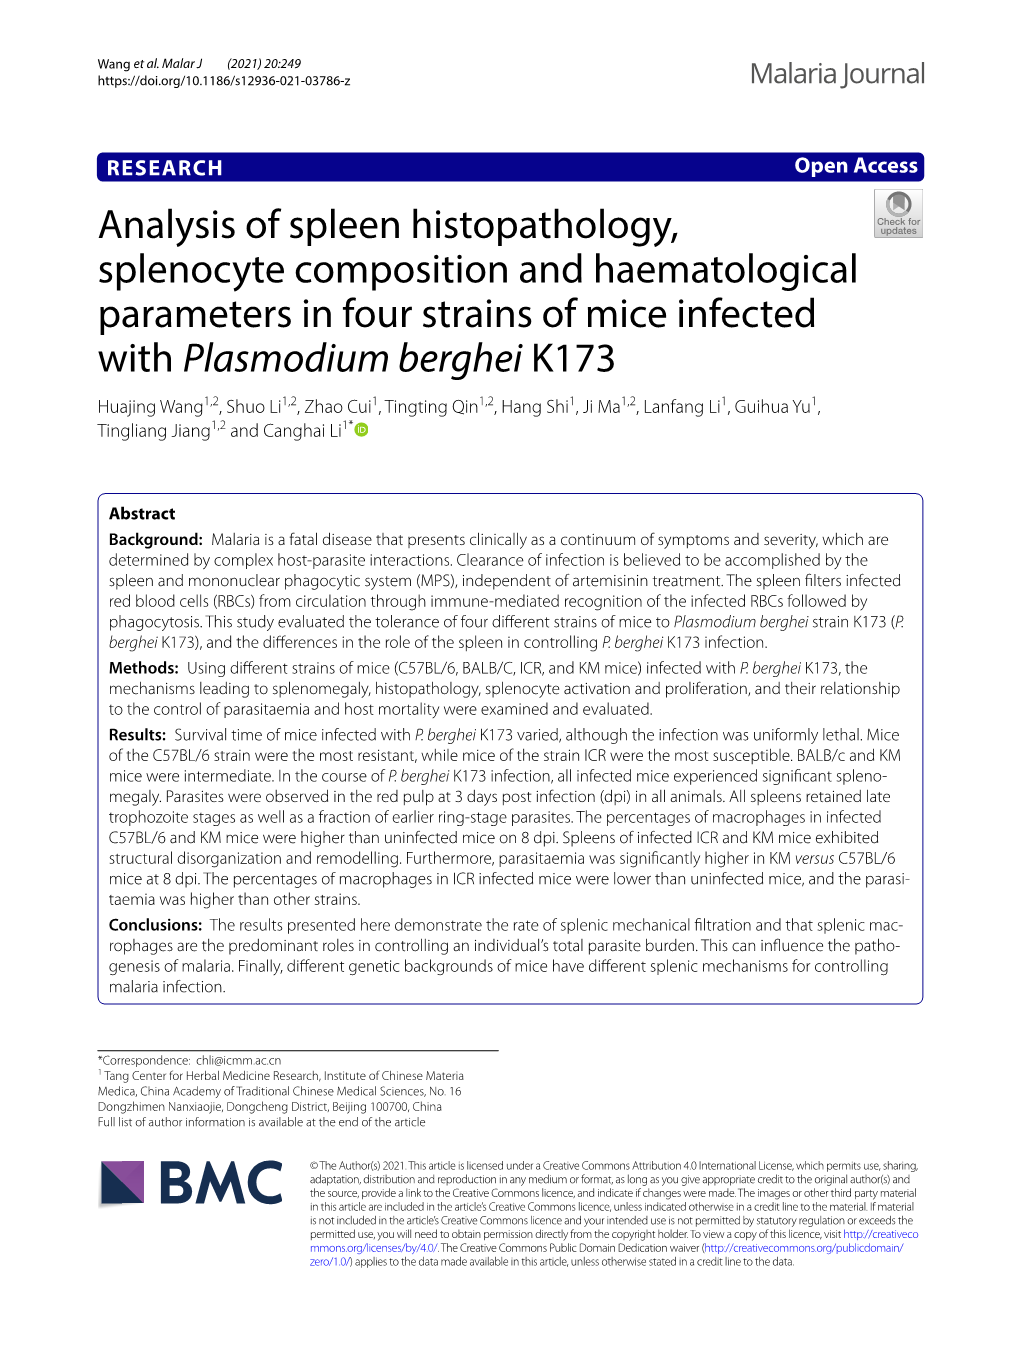 Analysis of Spleen Histopathology, Splenocyte Composition And